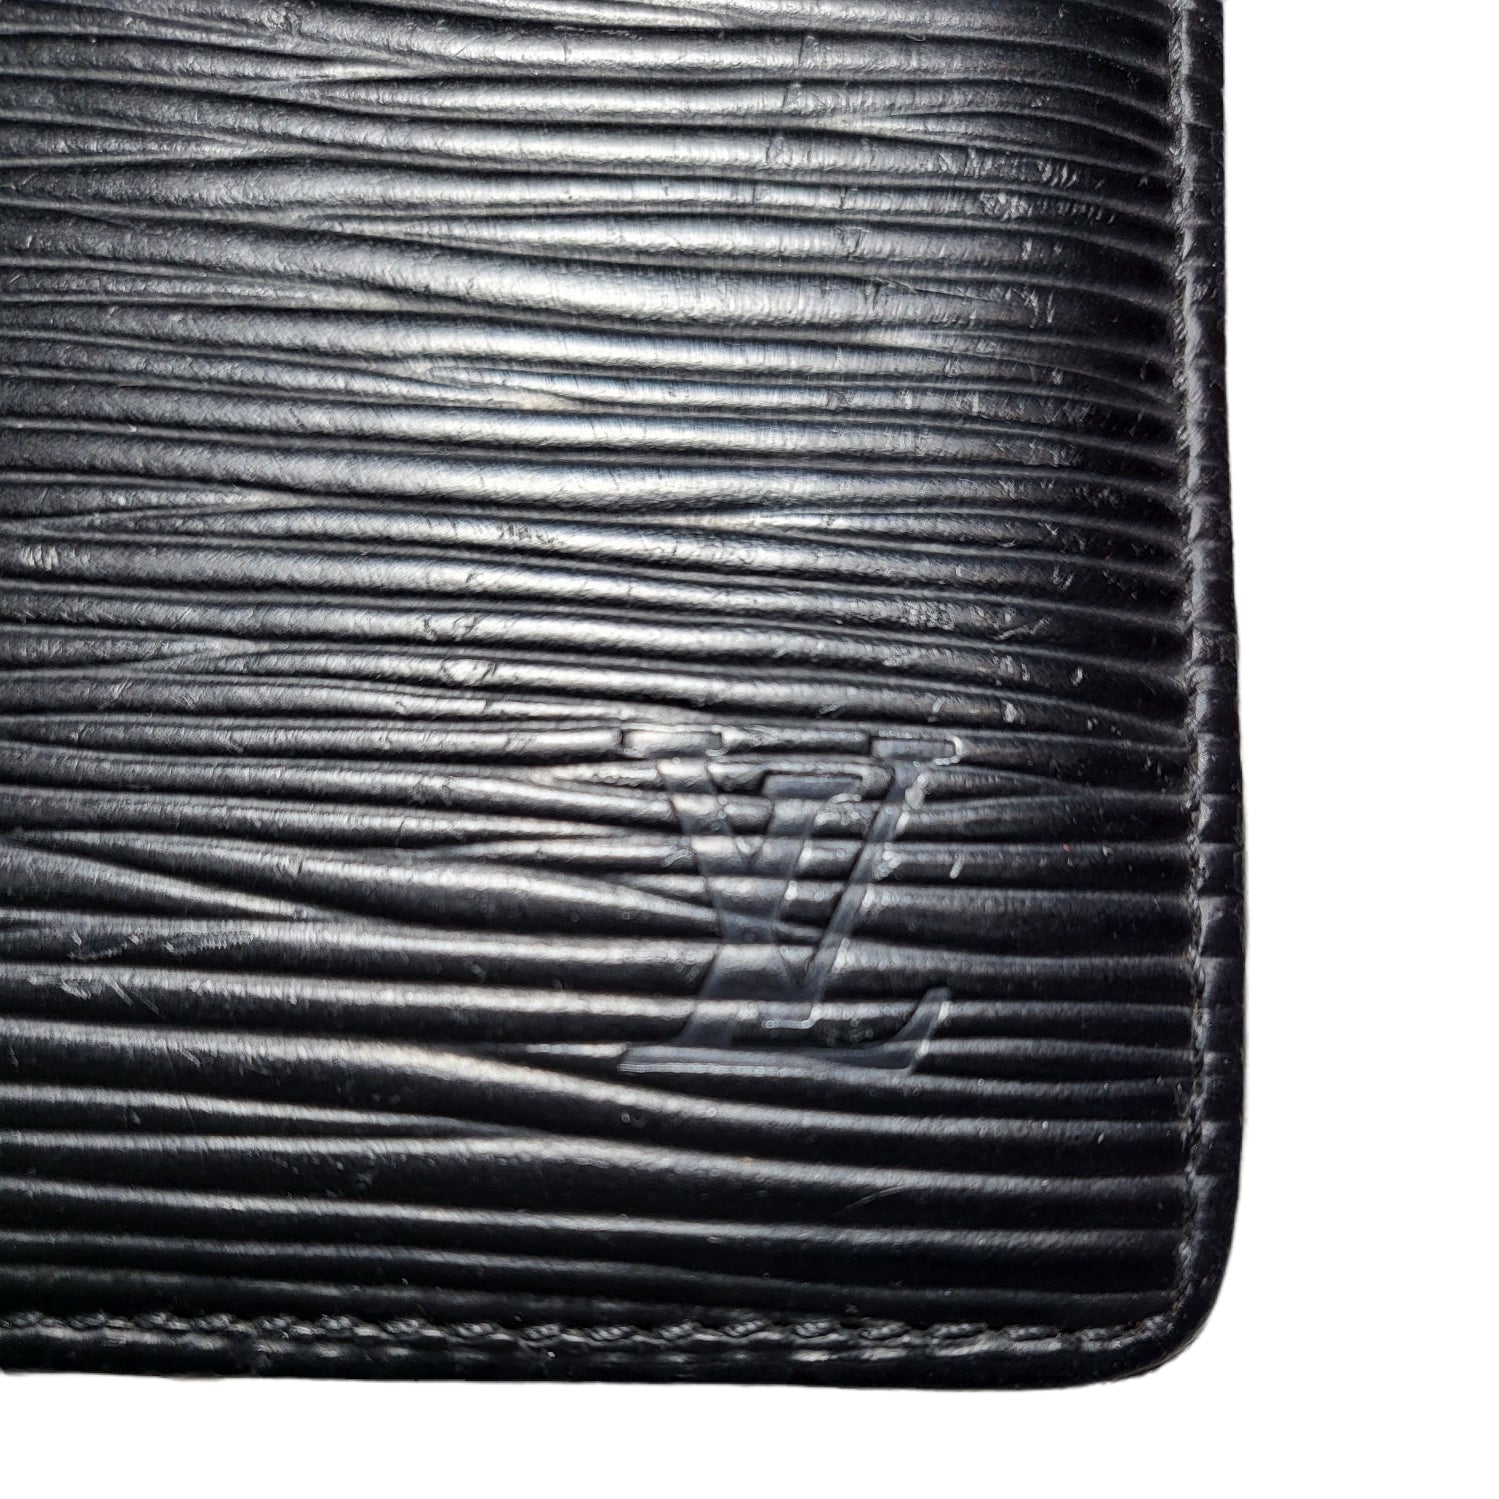 Shop for Louis Vuitton Green Epi Leather Marco Mens Wallet